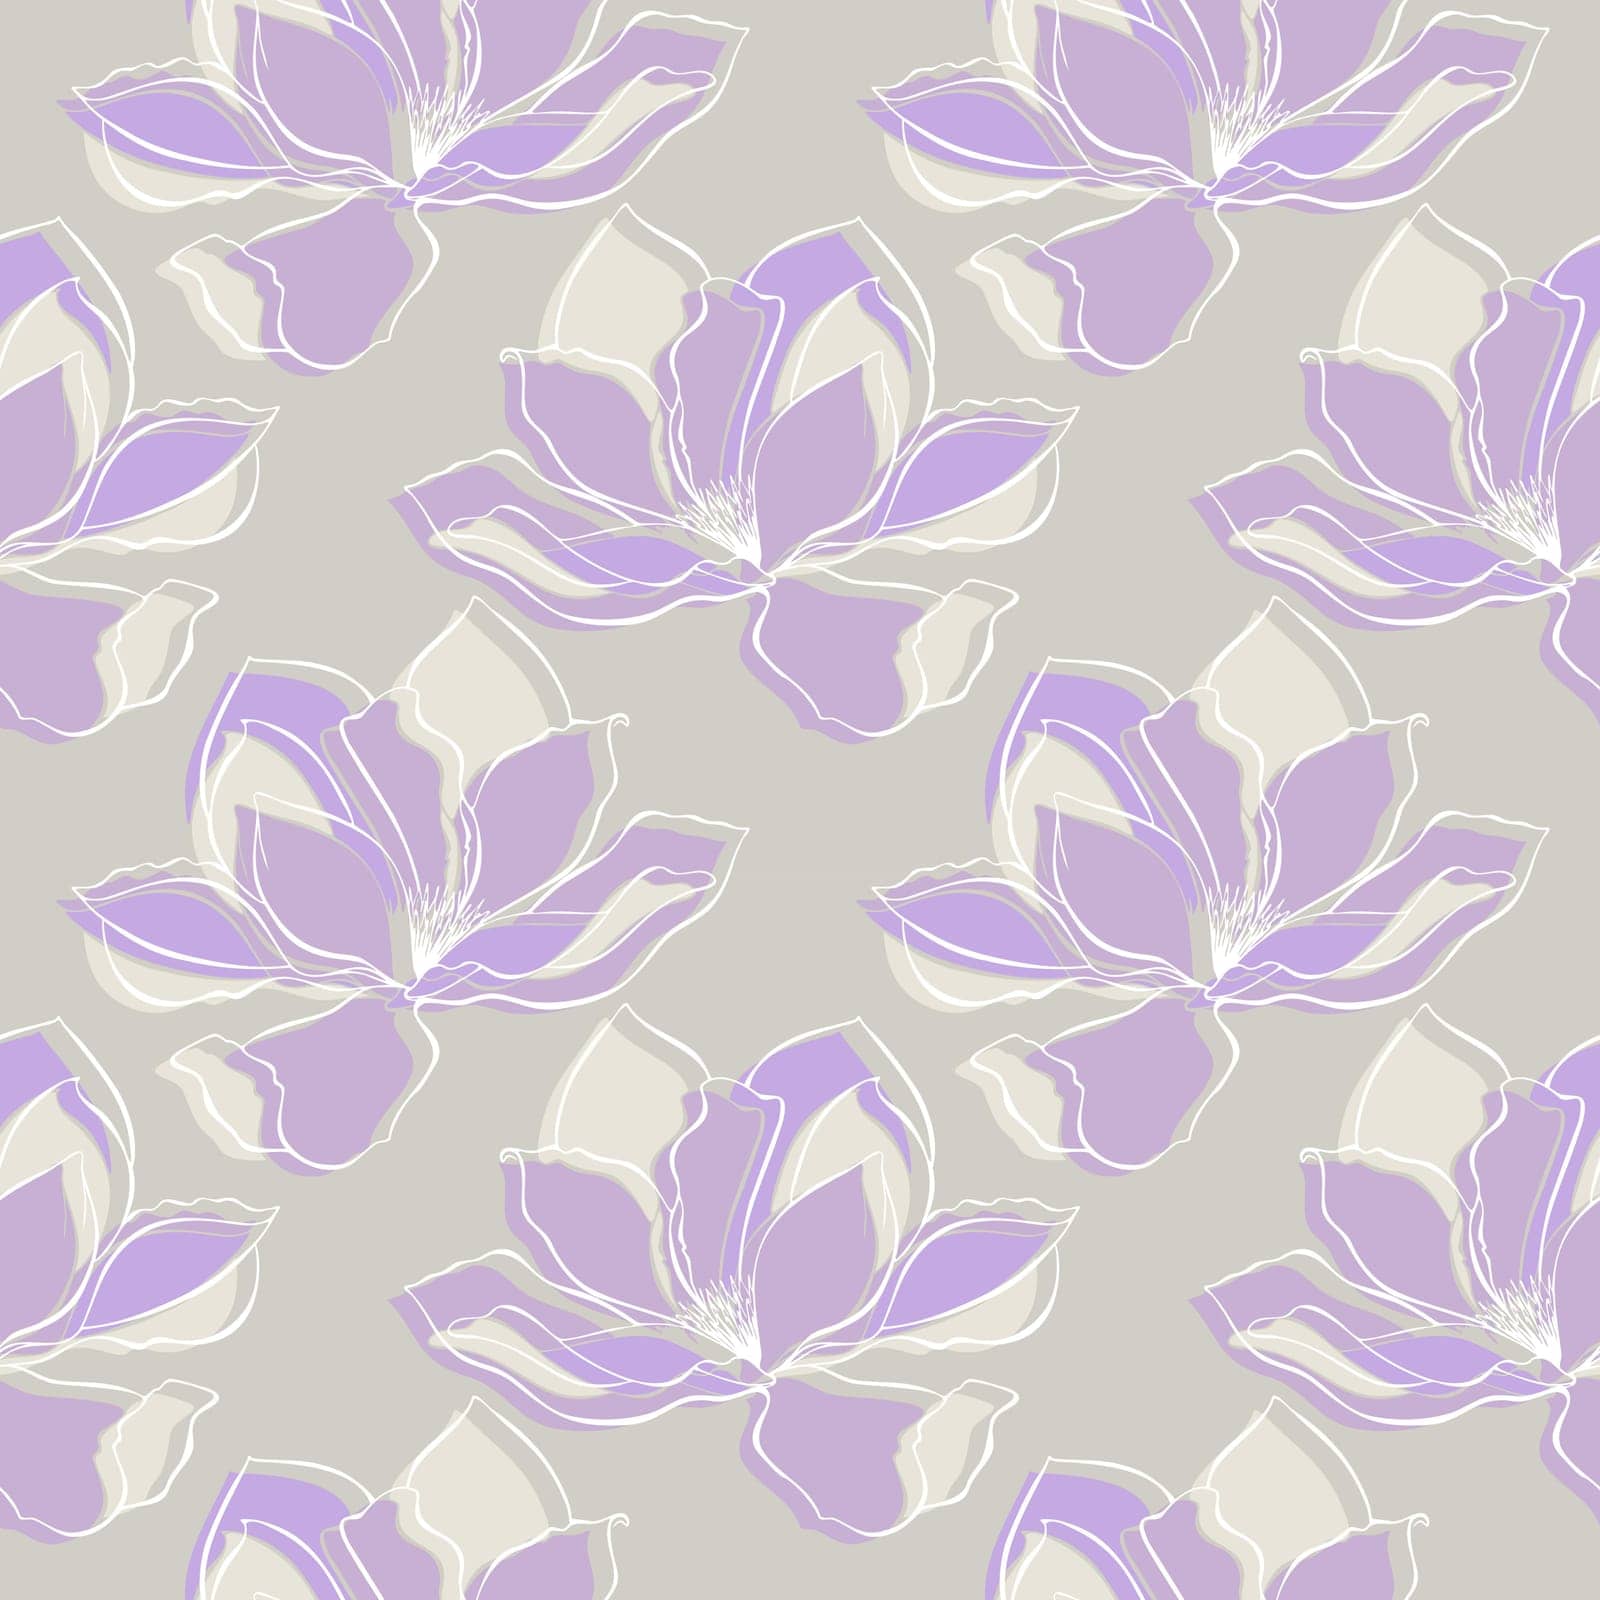 Magnolia violet pattern,contour flowers. Vector illustration